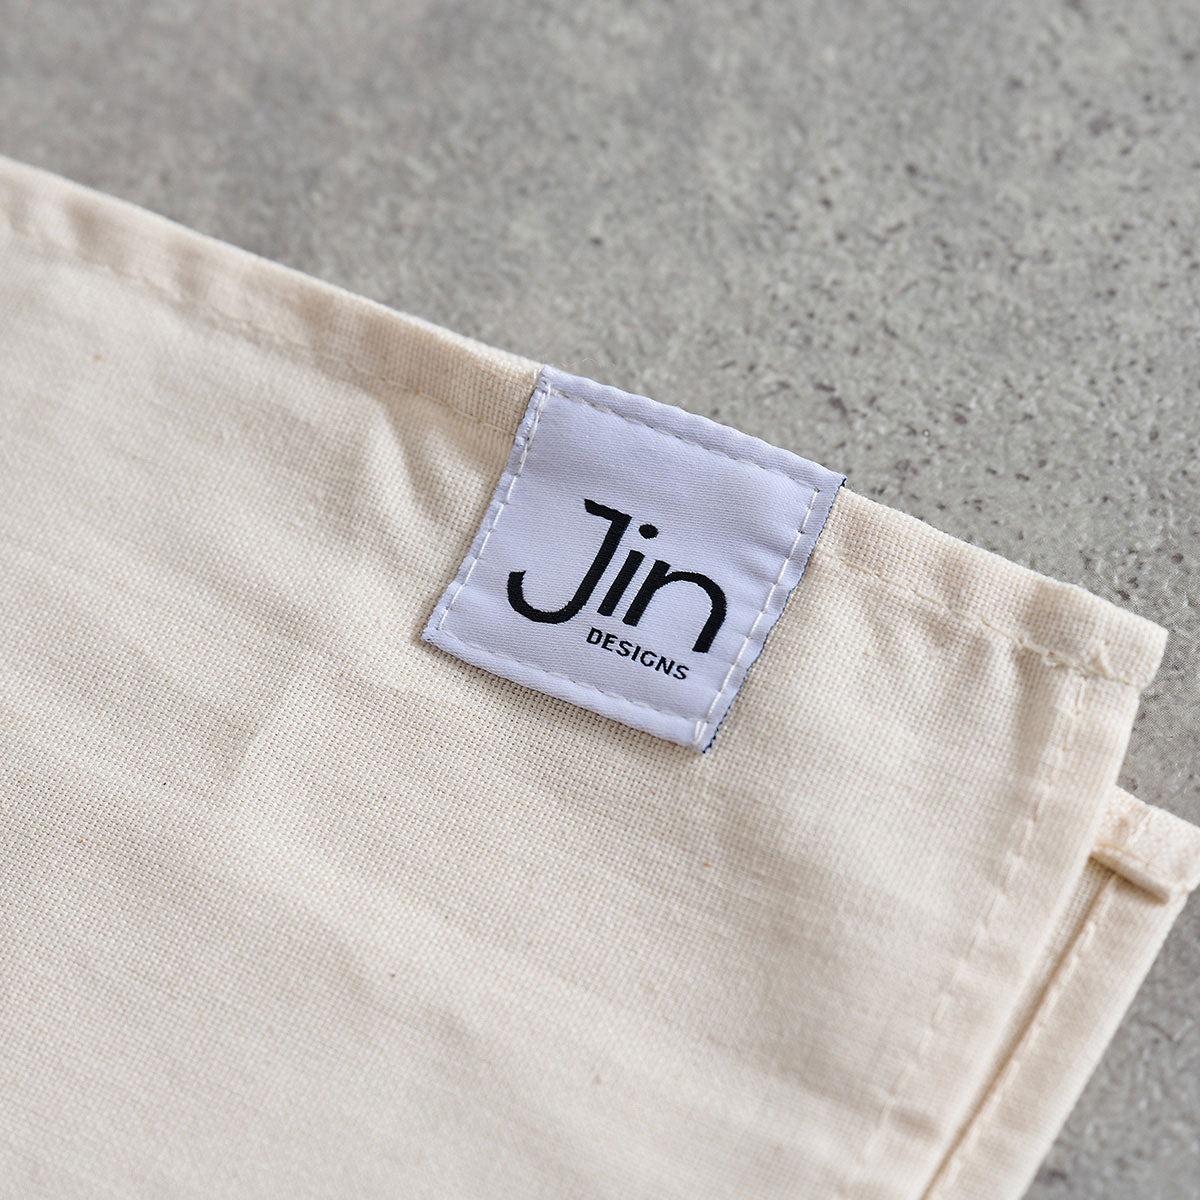 Jin Designs logo label on tea towel